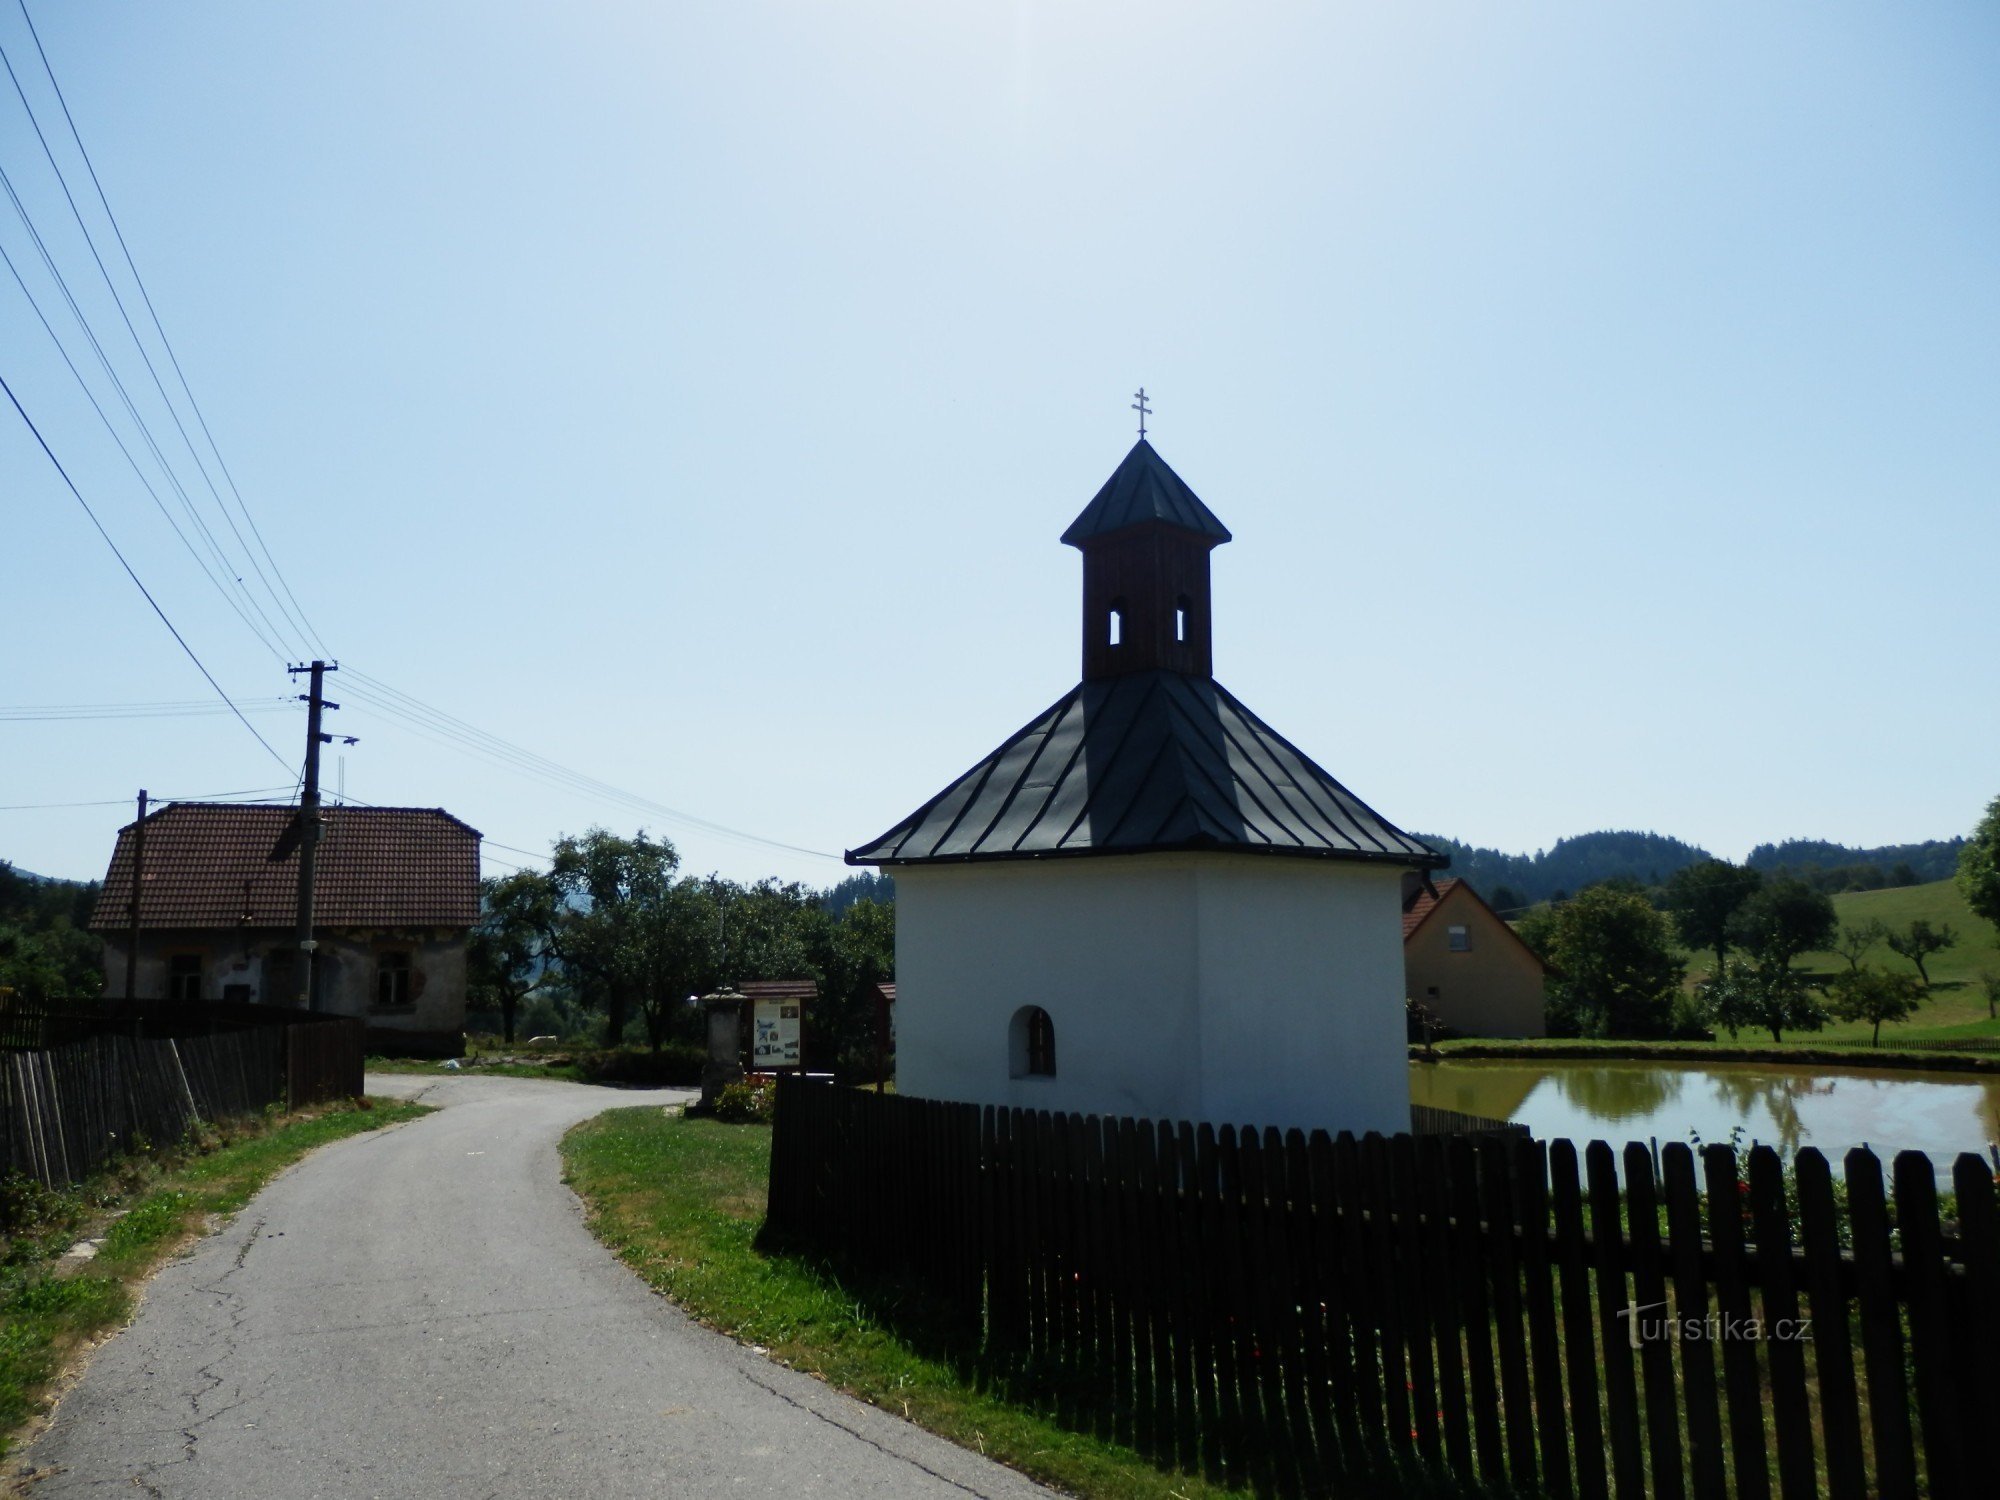 Bystřice nad Pernštejnem - parte local de Kozlov